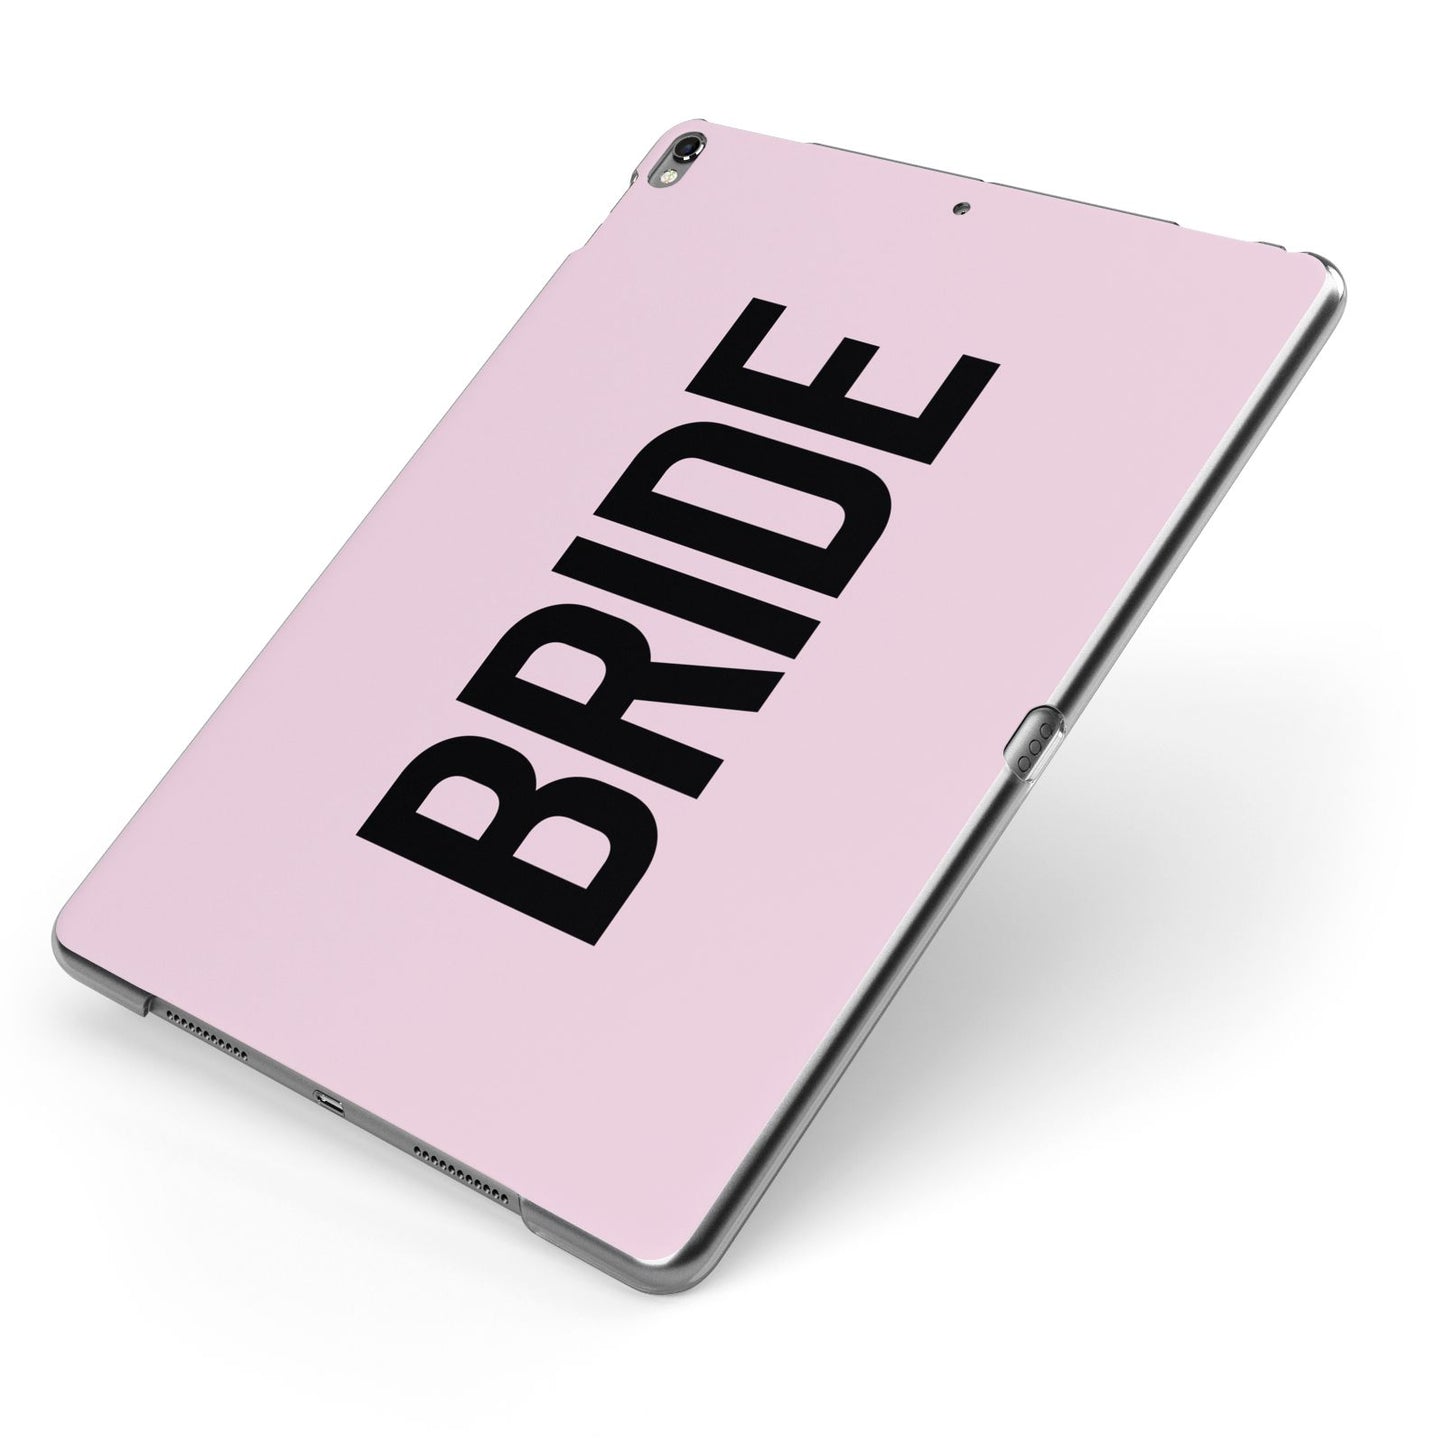 Bride Apple iPad Case on Grey iPad Side View